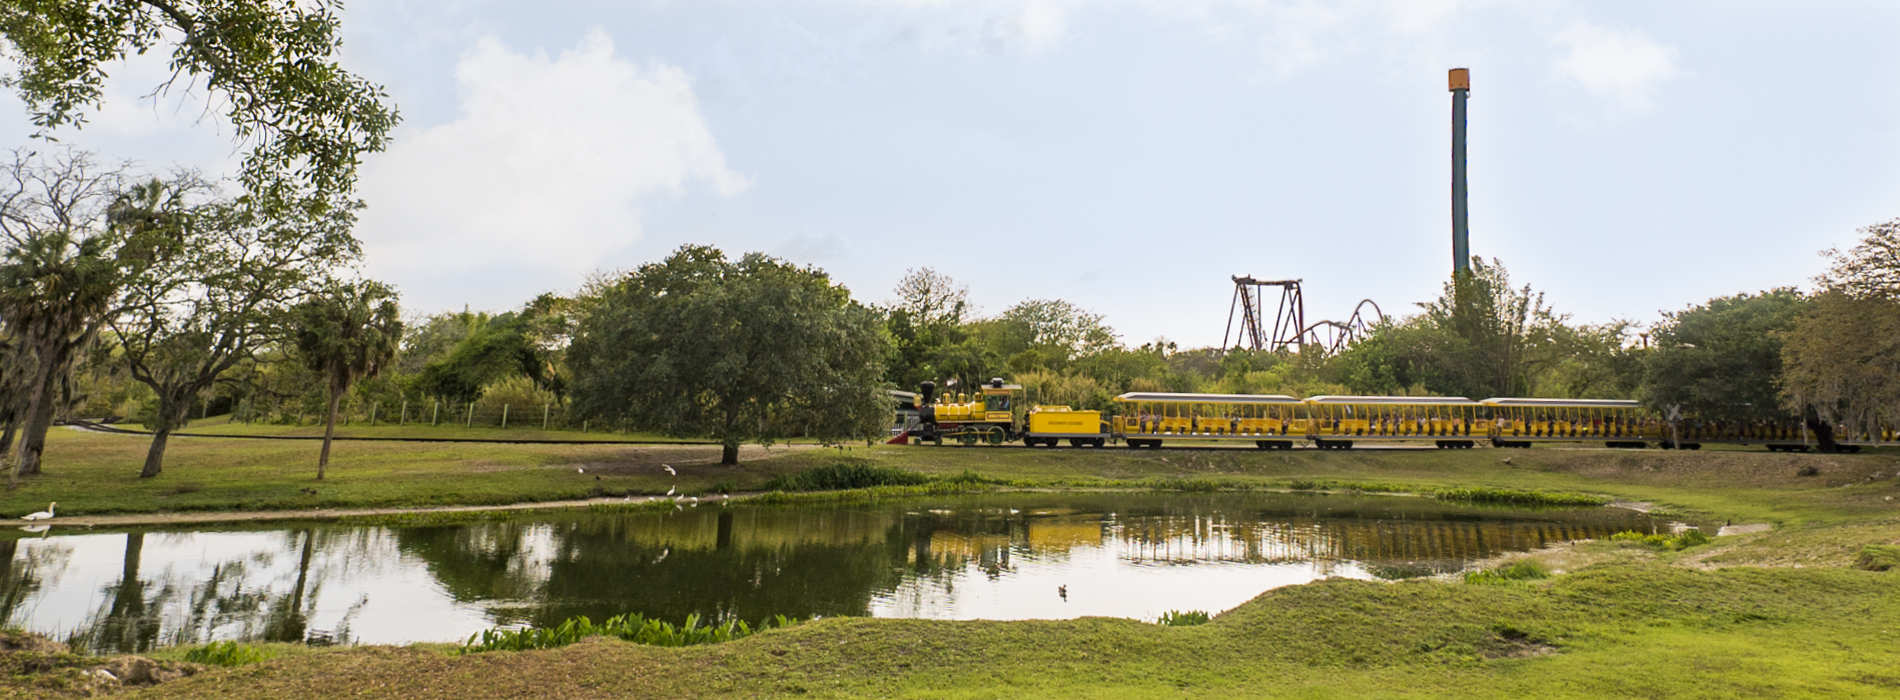 Serengeti Express Train